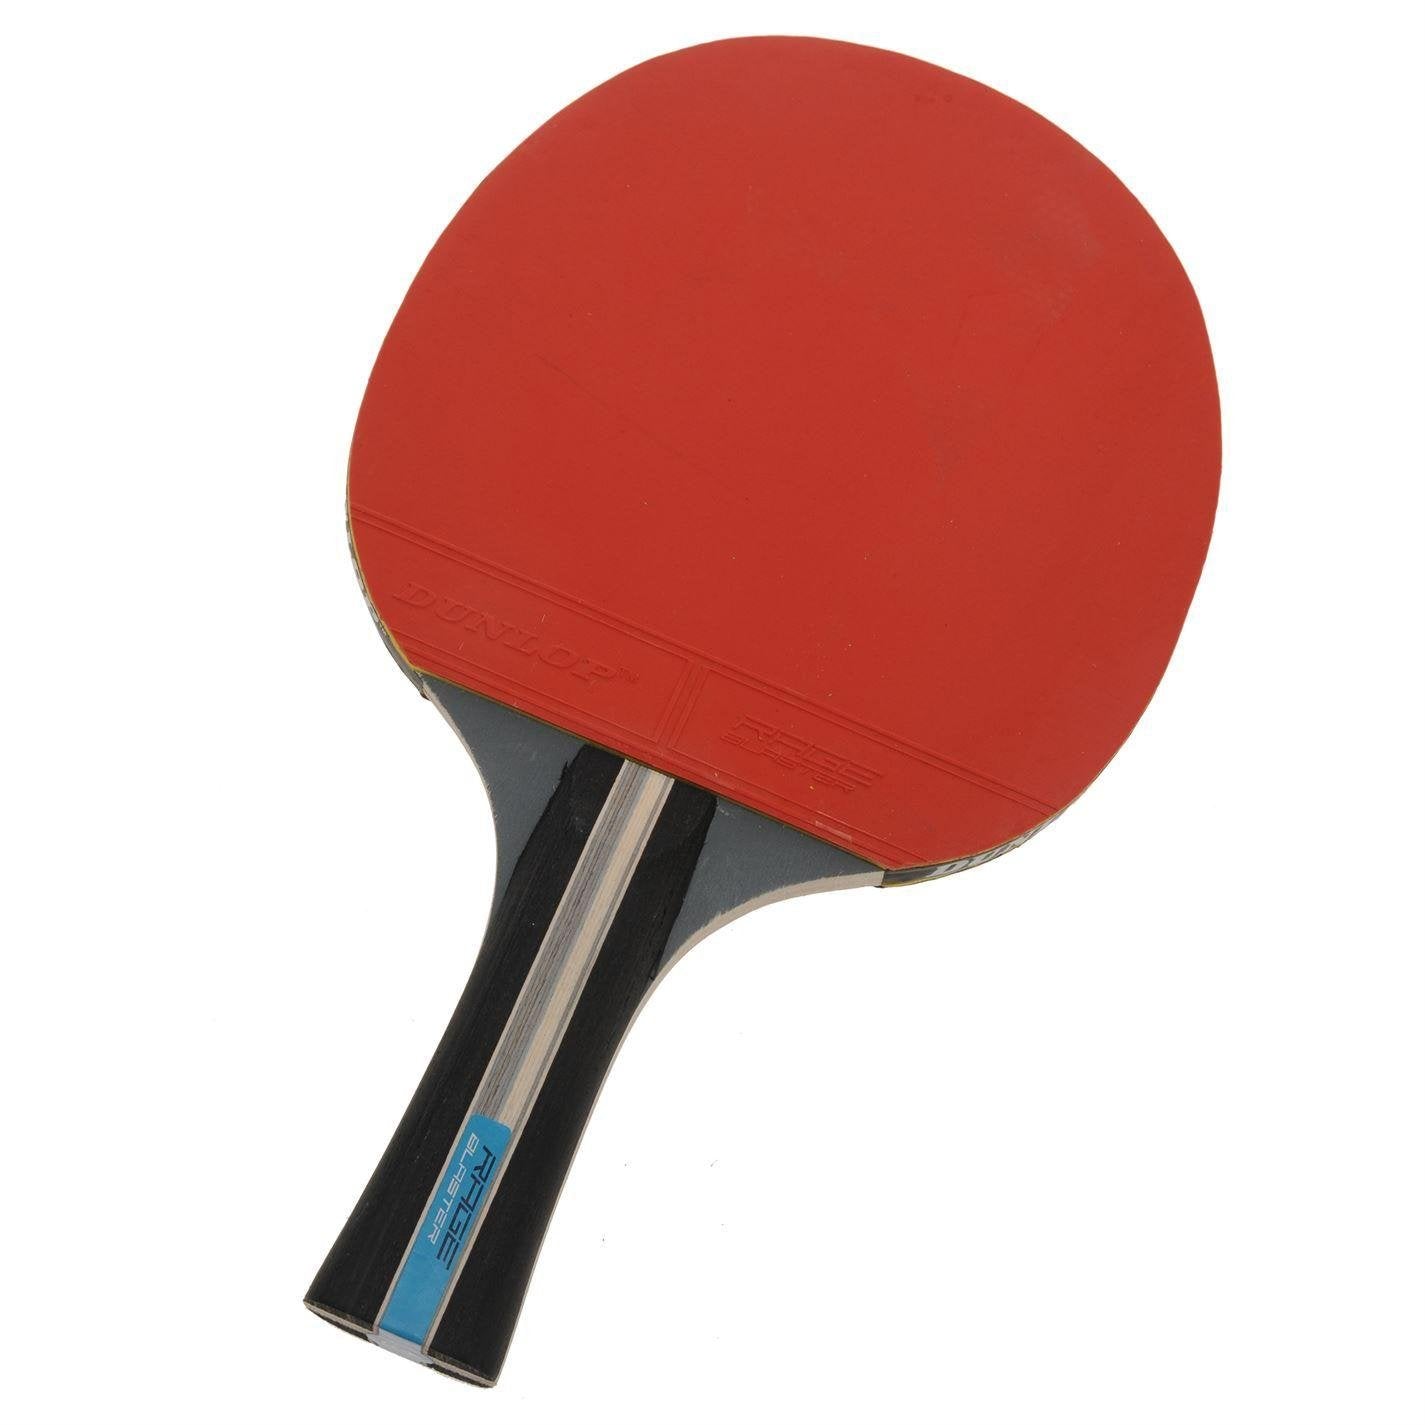 Dunlop Rage Blaster Rubber Table Tennis Bat